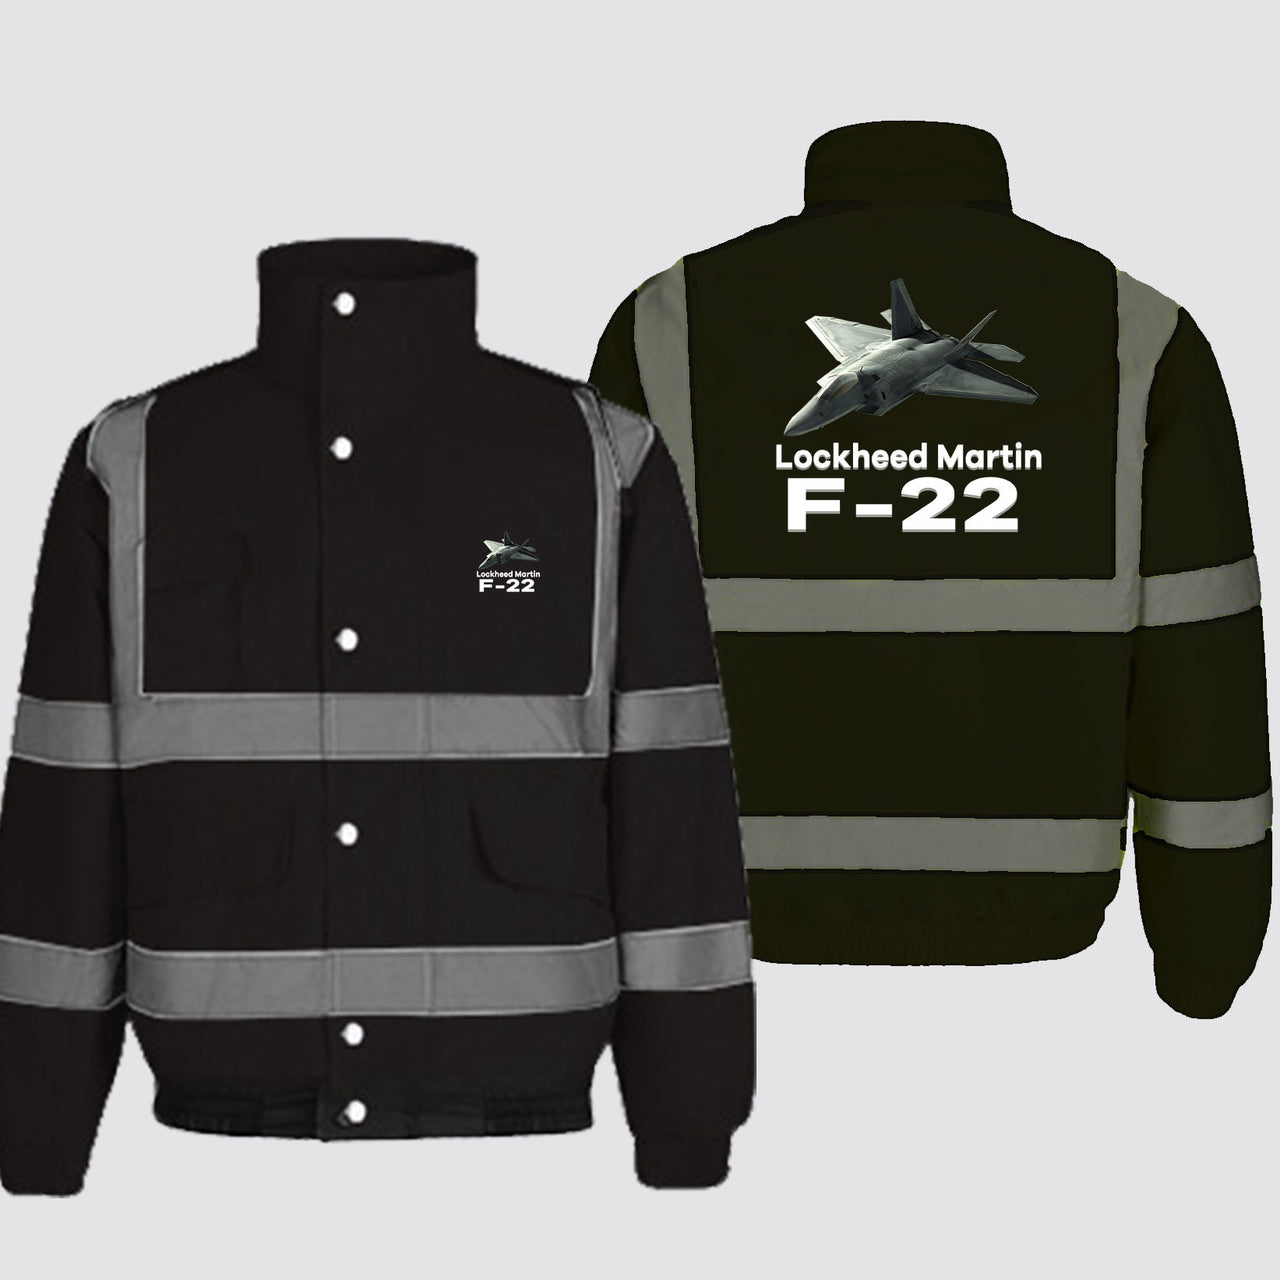 The Lockheed Martin F22 Designed Reflective Winter Jackets